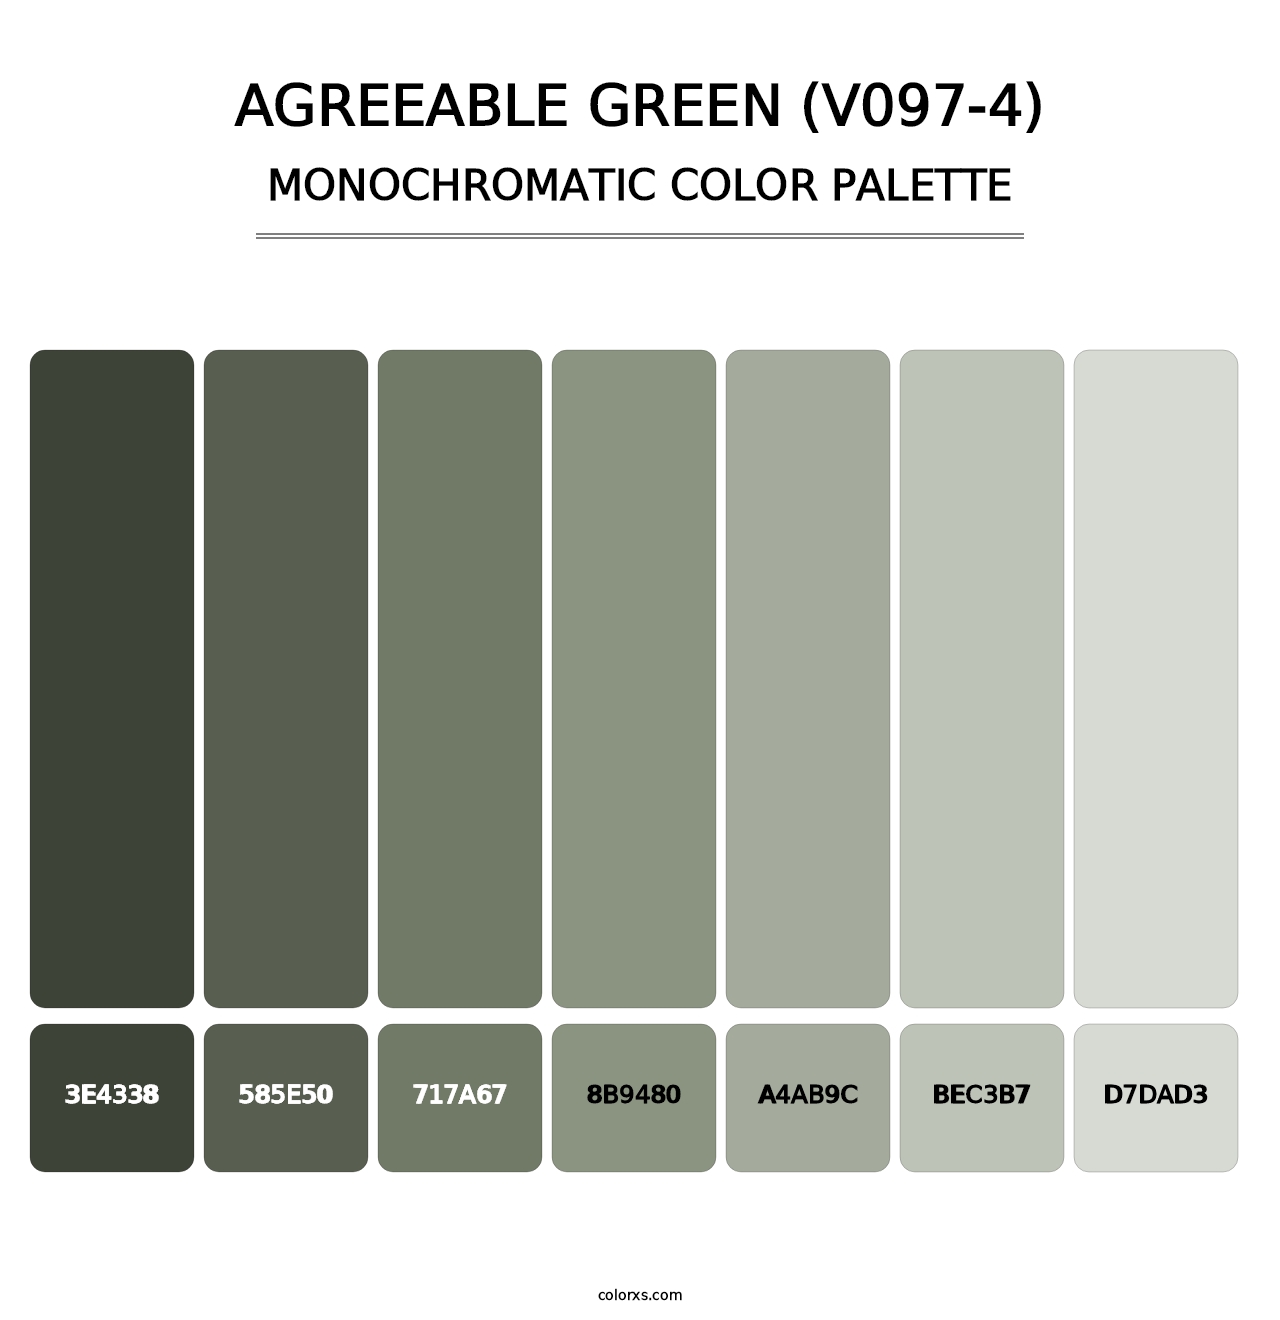 Agreeable Green (V097-4) - Monochromatic Color Palette